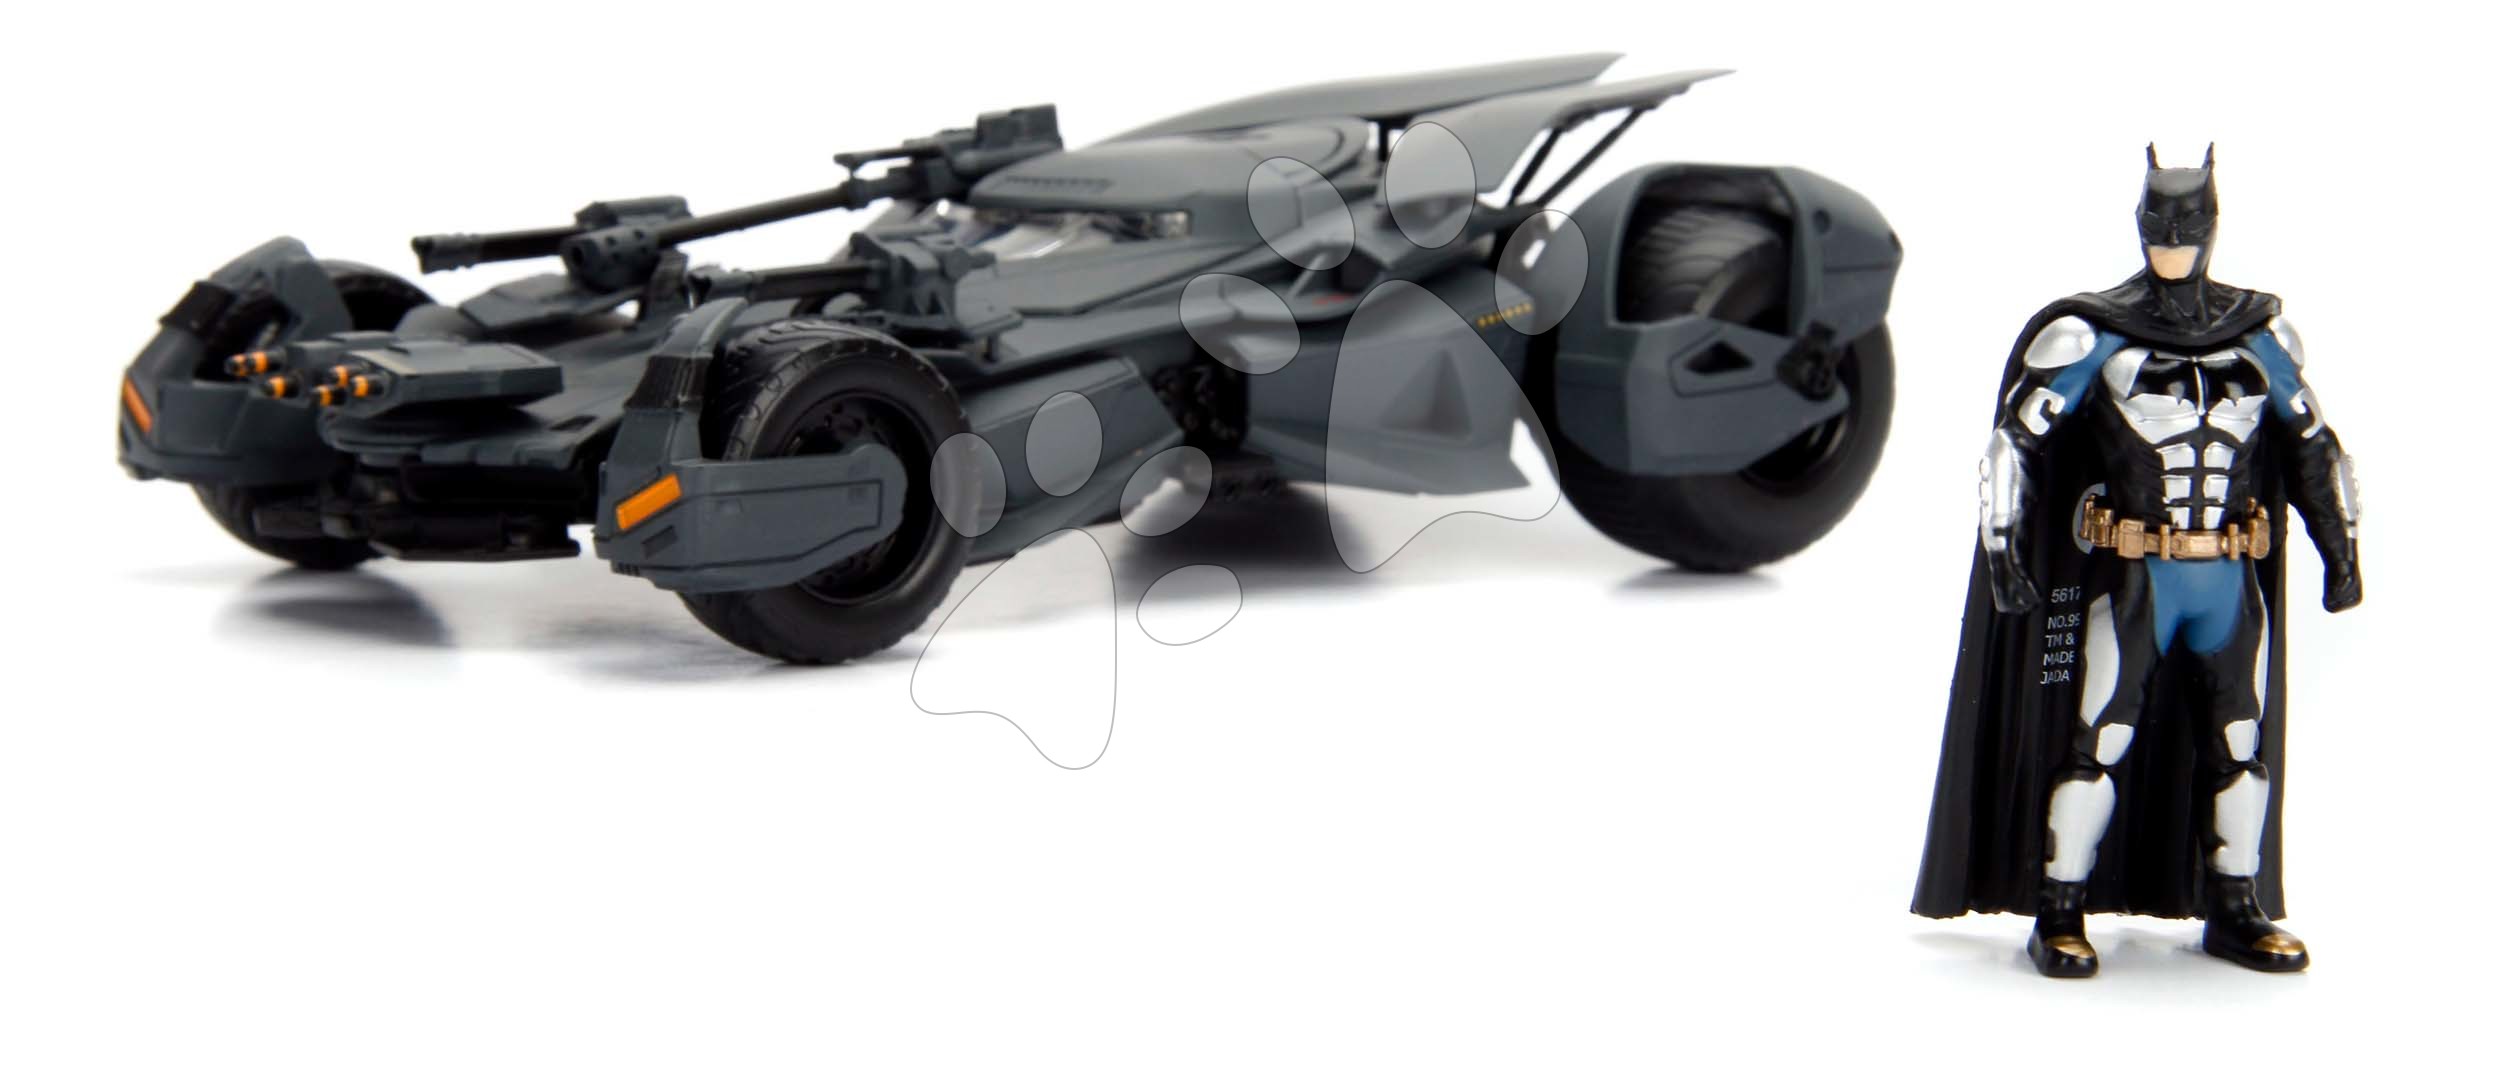 Batmobil-Auto der Justice League mit Batman-Jada-Figur